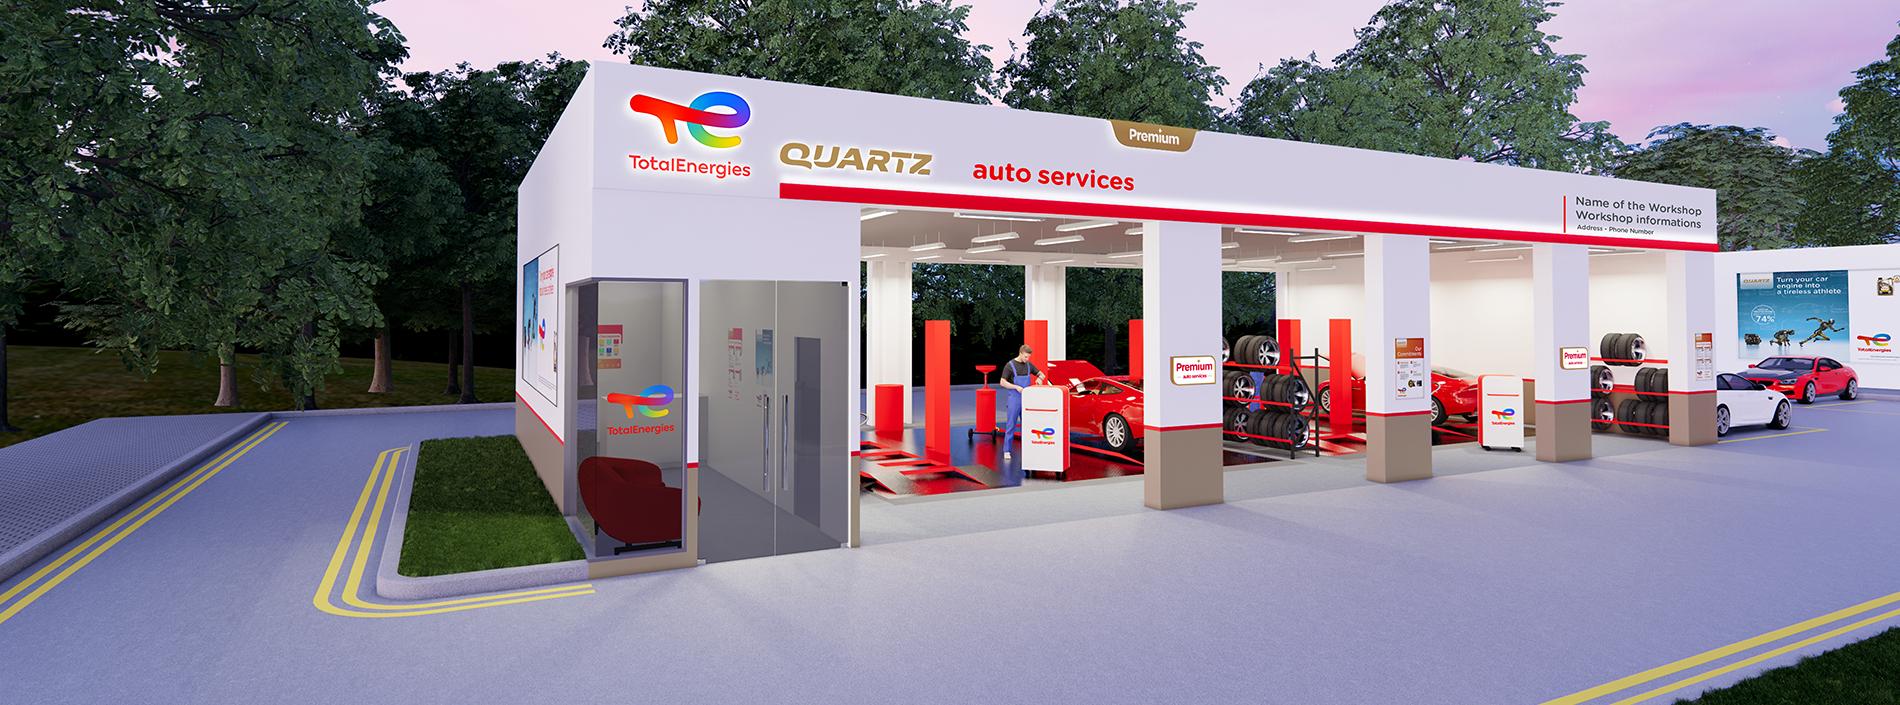 TotalEnergies QUARTZ Car Engine Oil & Lubricants